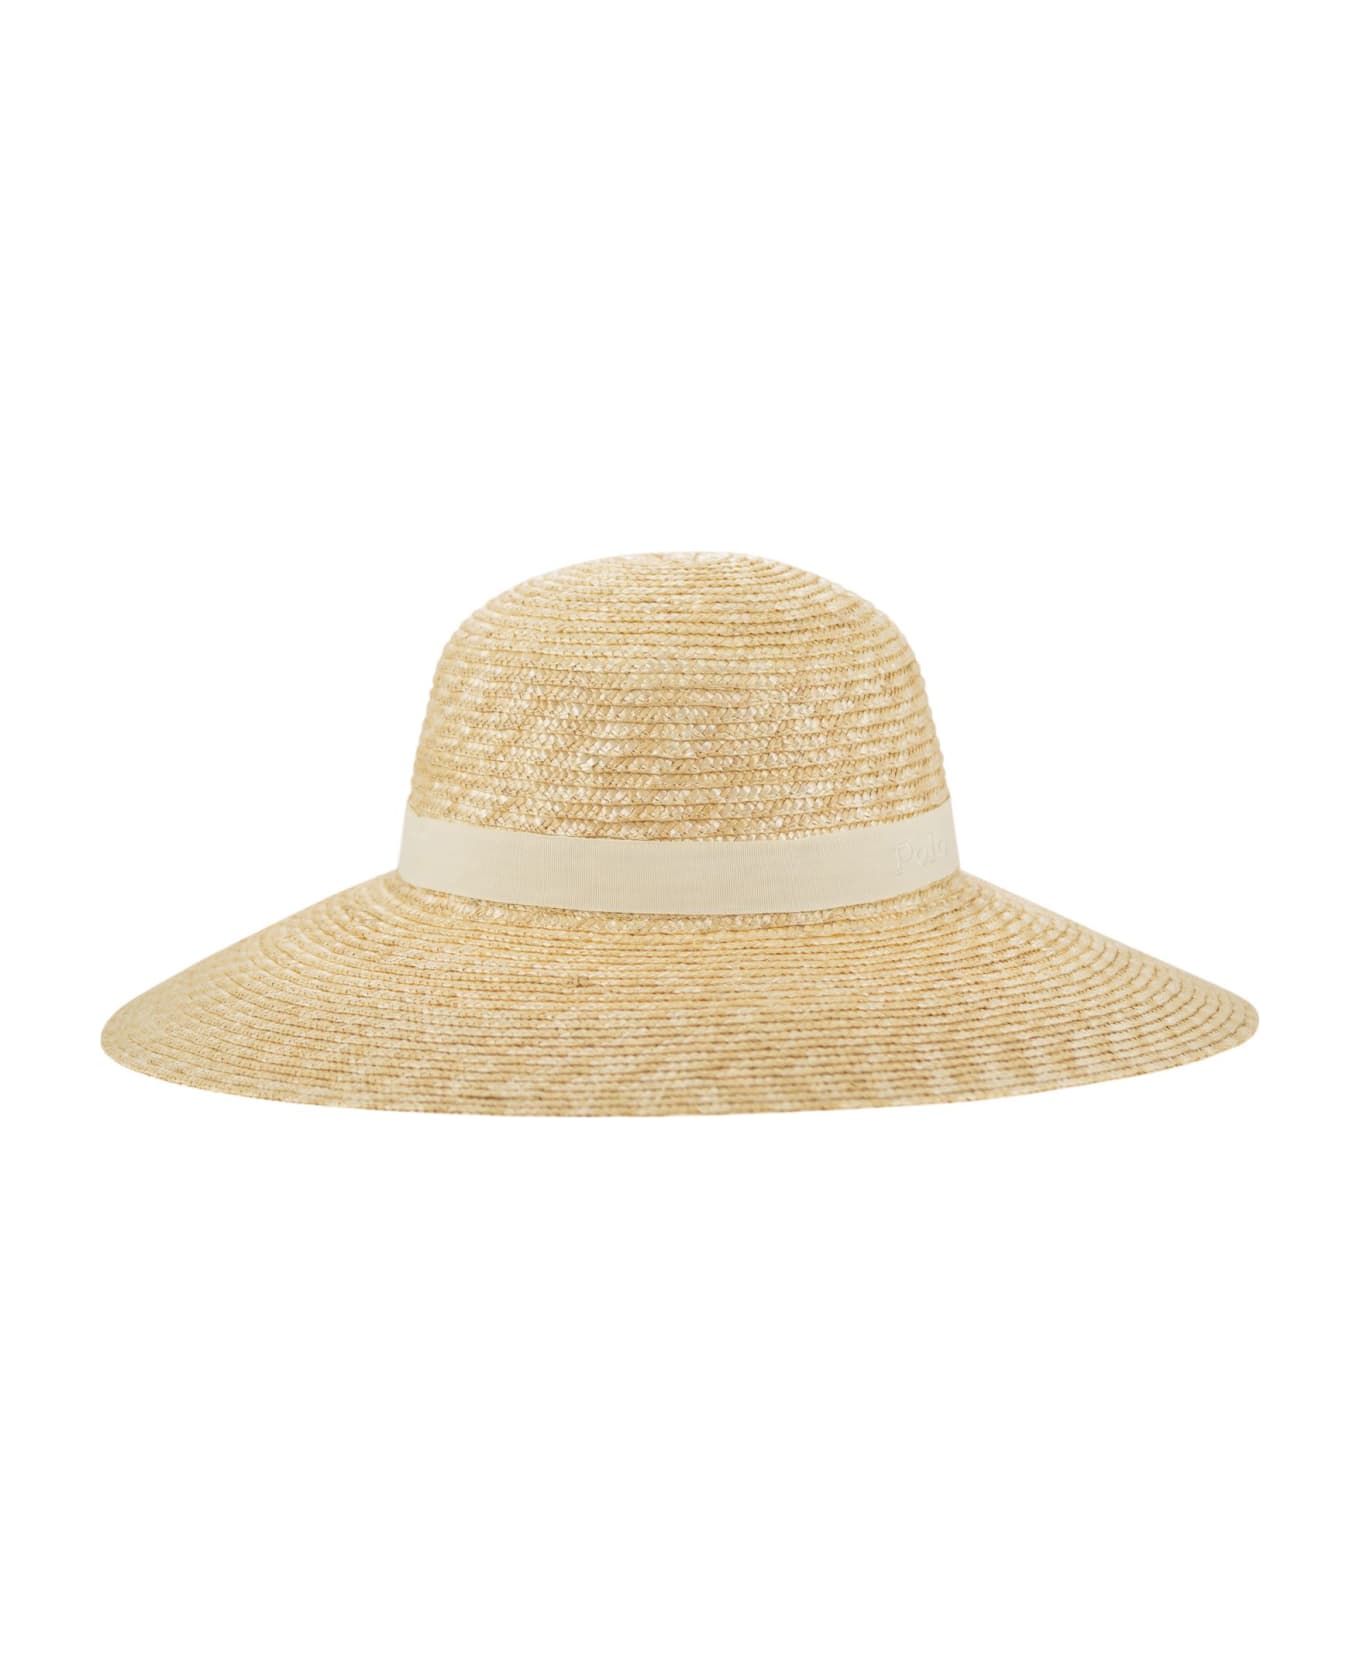 Polo Ralph Lauren Straw Hat - Natural